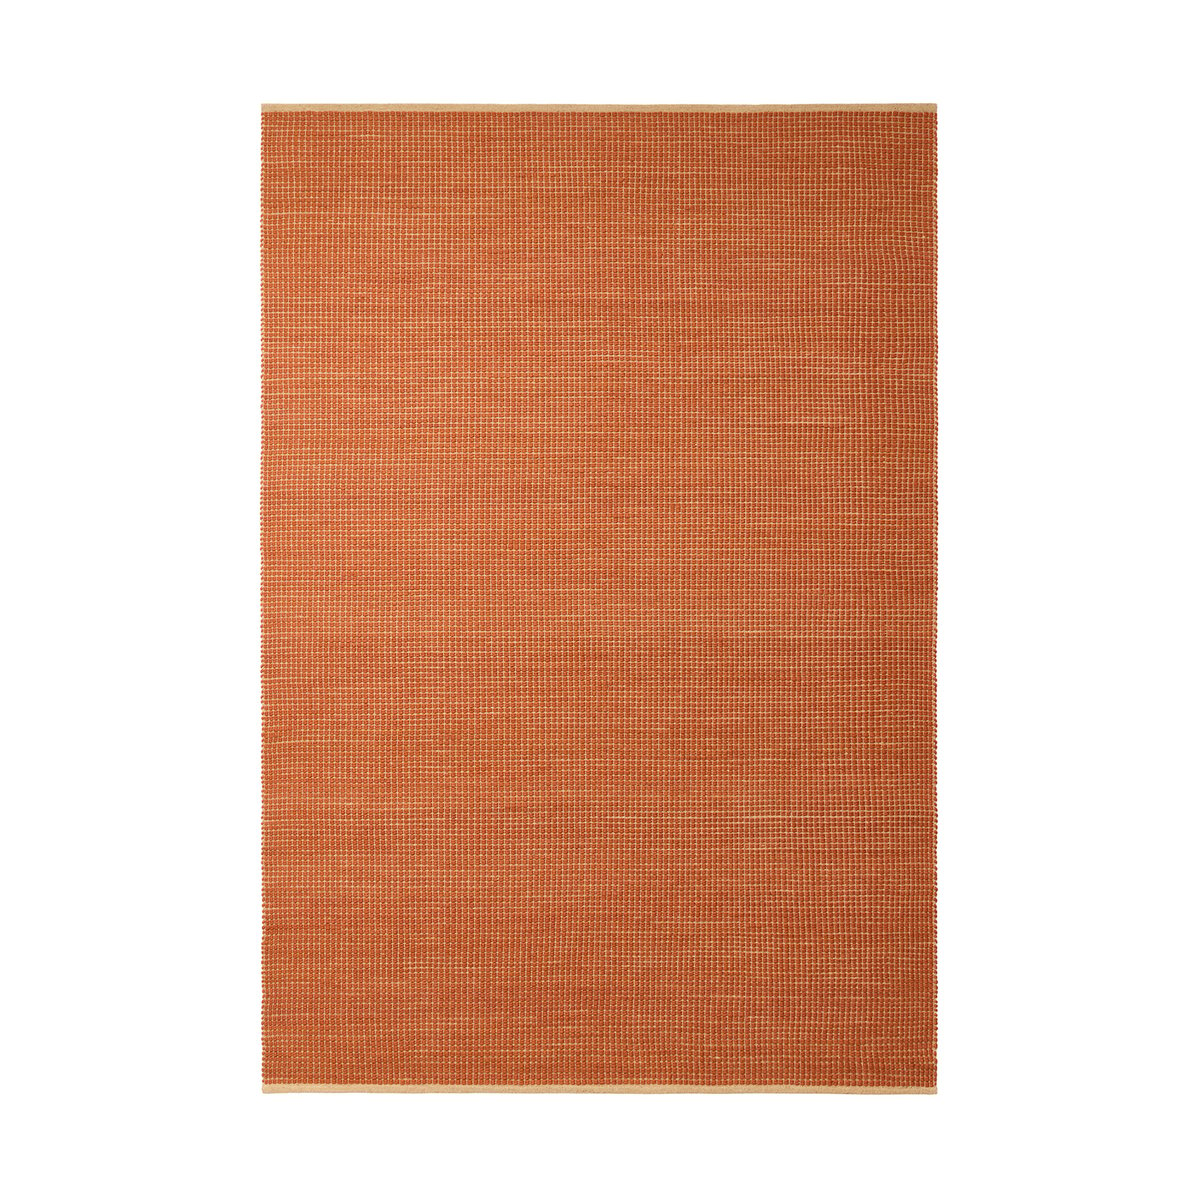 Chhatwal & Jonsson Bengal vloerkleed Orange, 170x240 cm